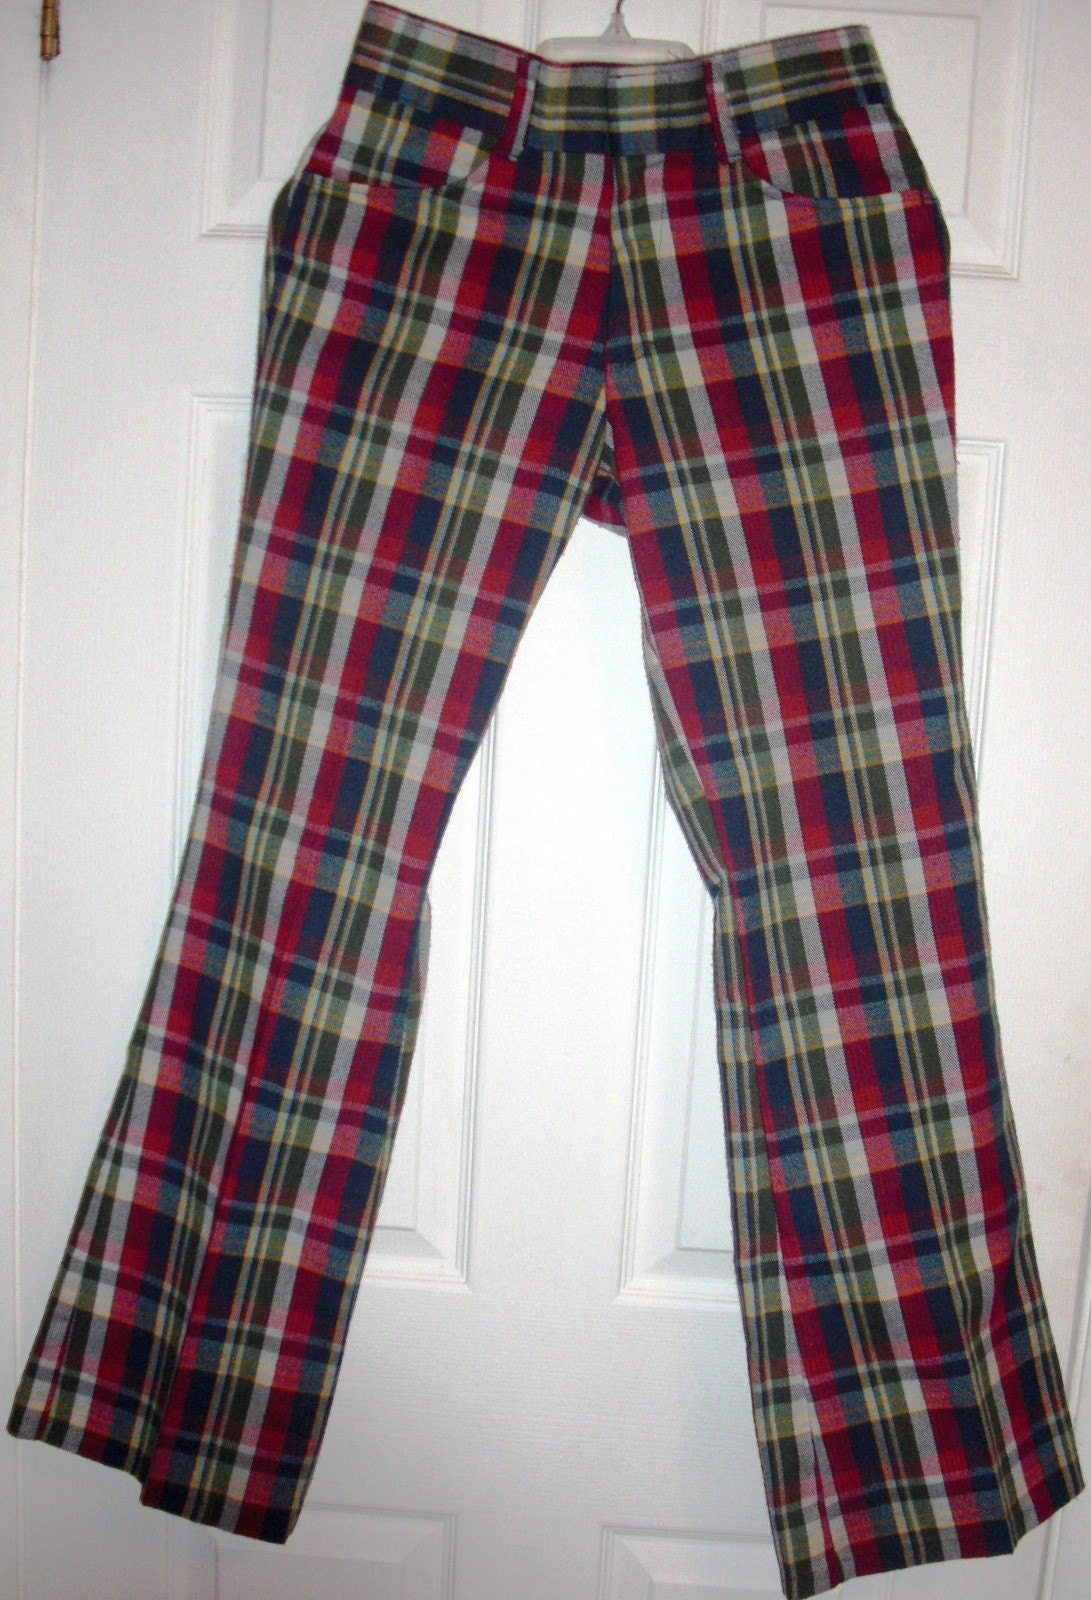 70s Men's Plaid Pants by Sears Put on Shop by gottagovintage1